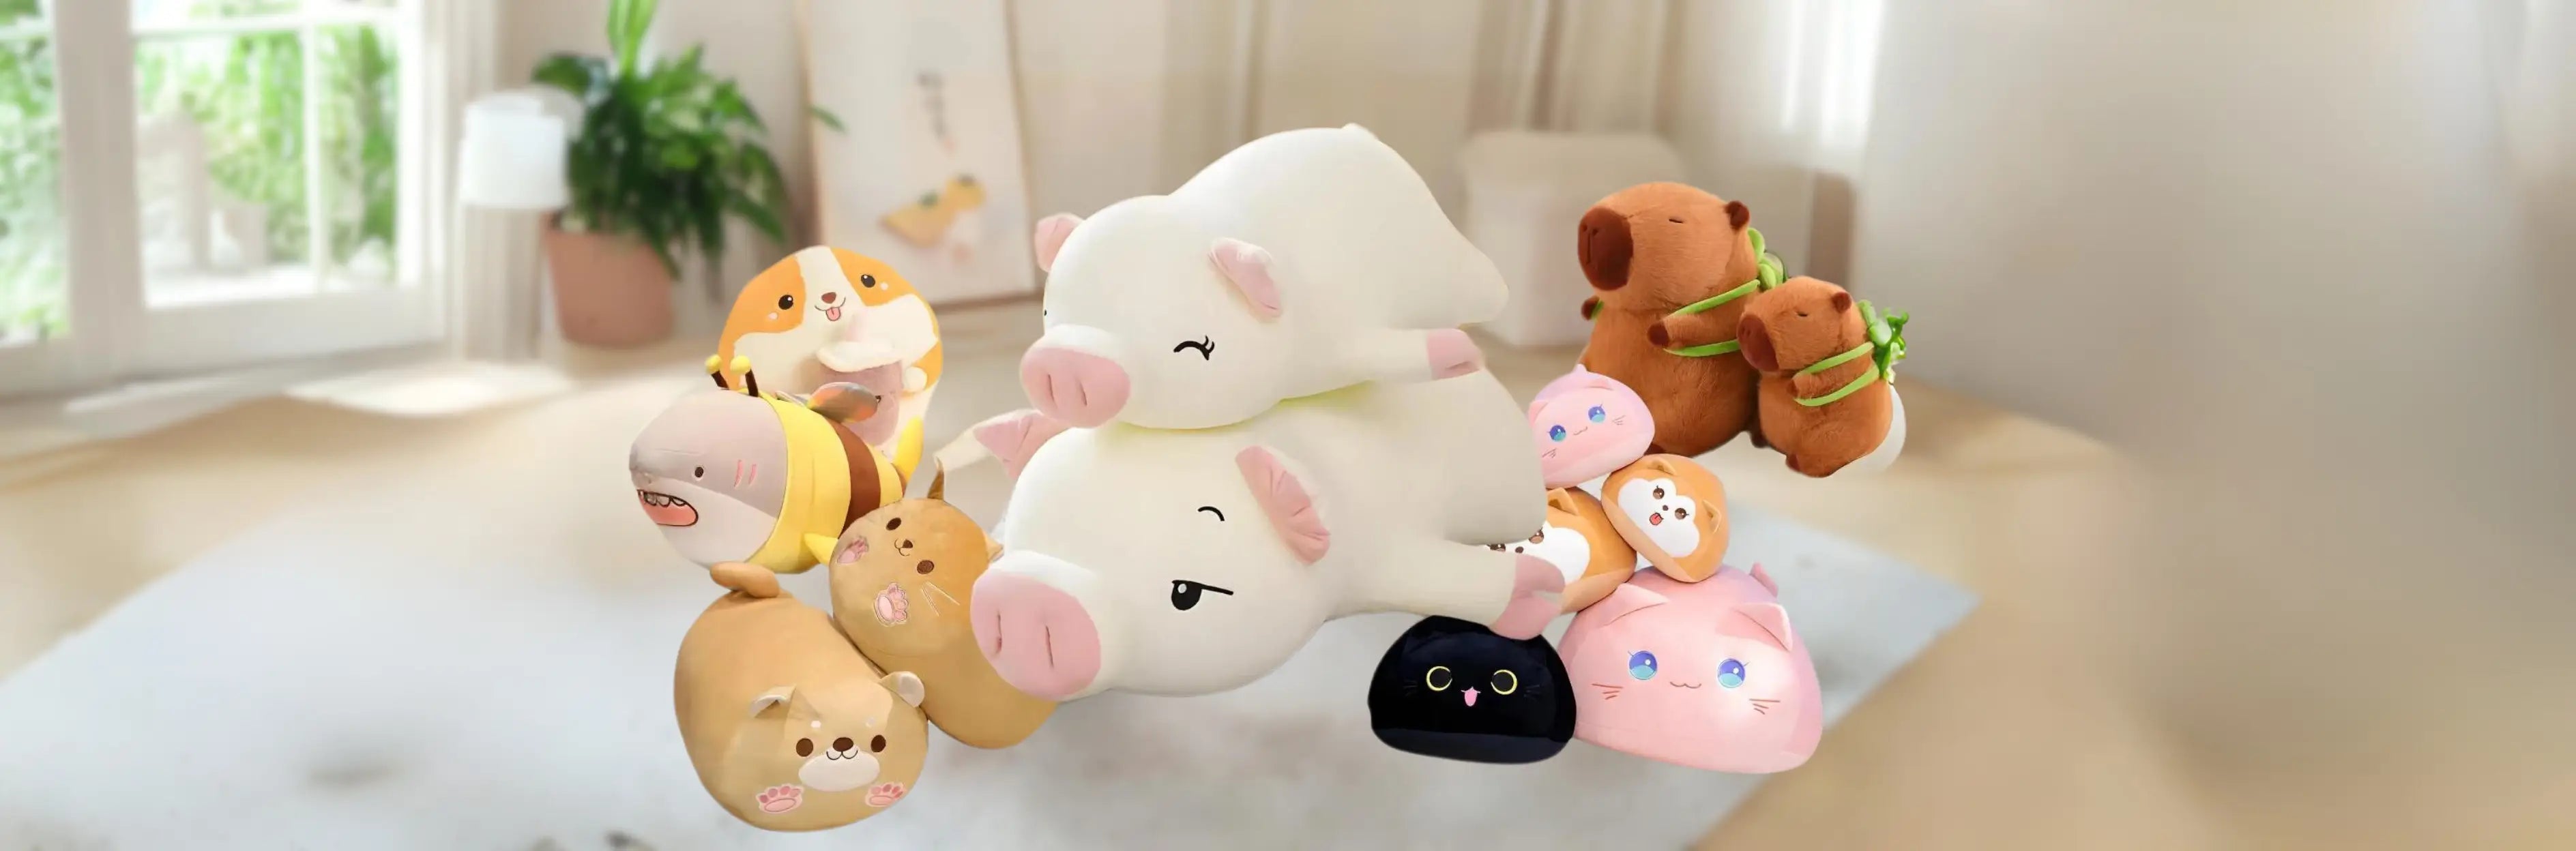 Stuffed Animals - Adorbs Plushies